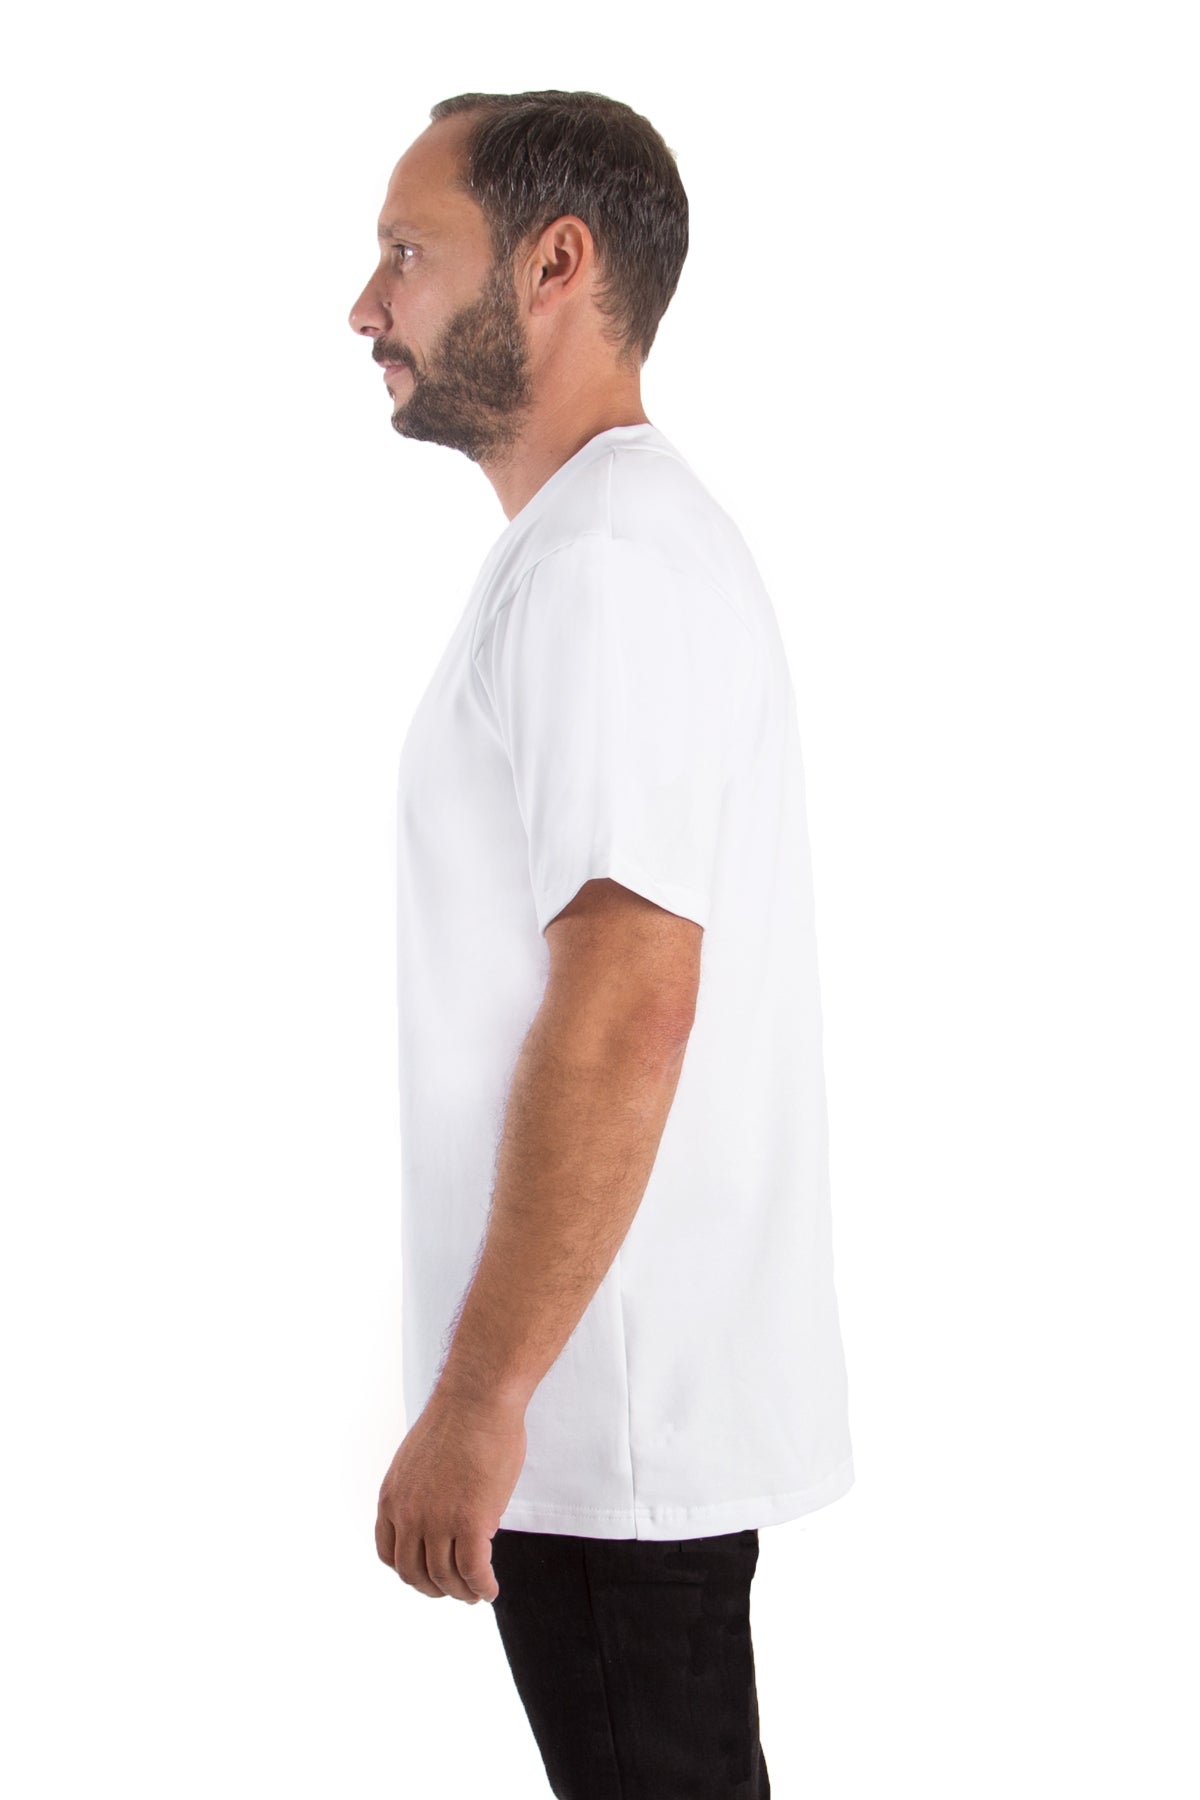 T-Shirt V-Neck (10er-Pack) - mint